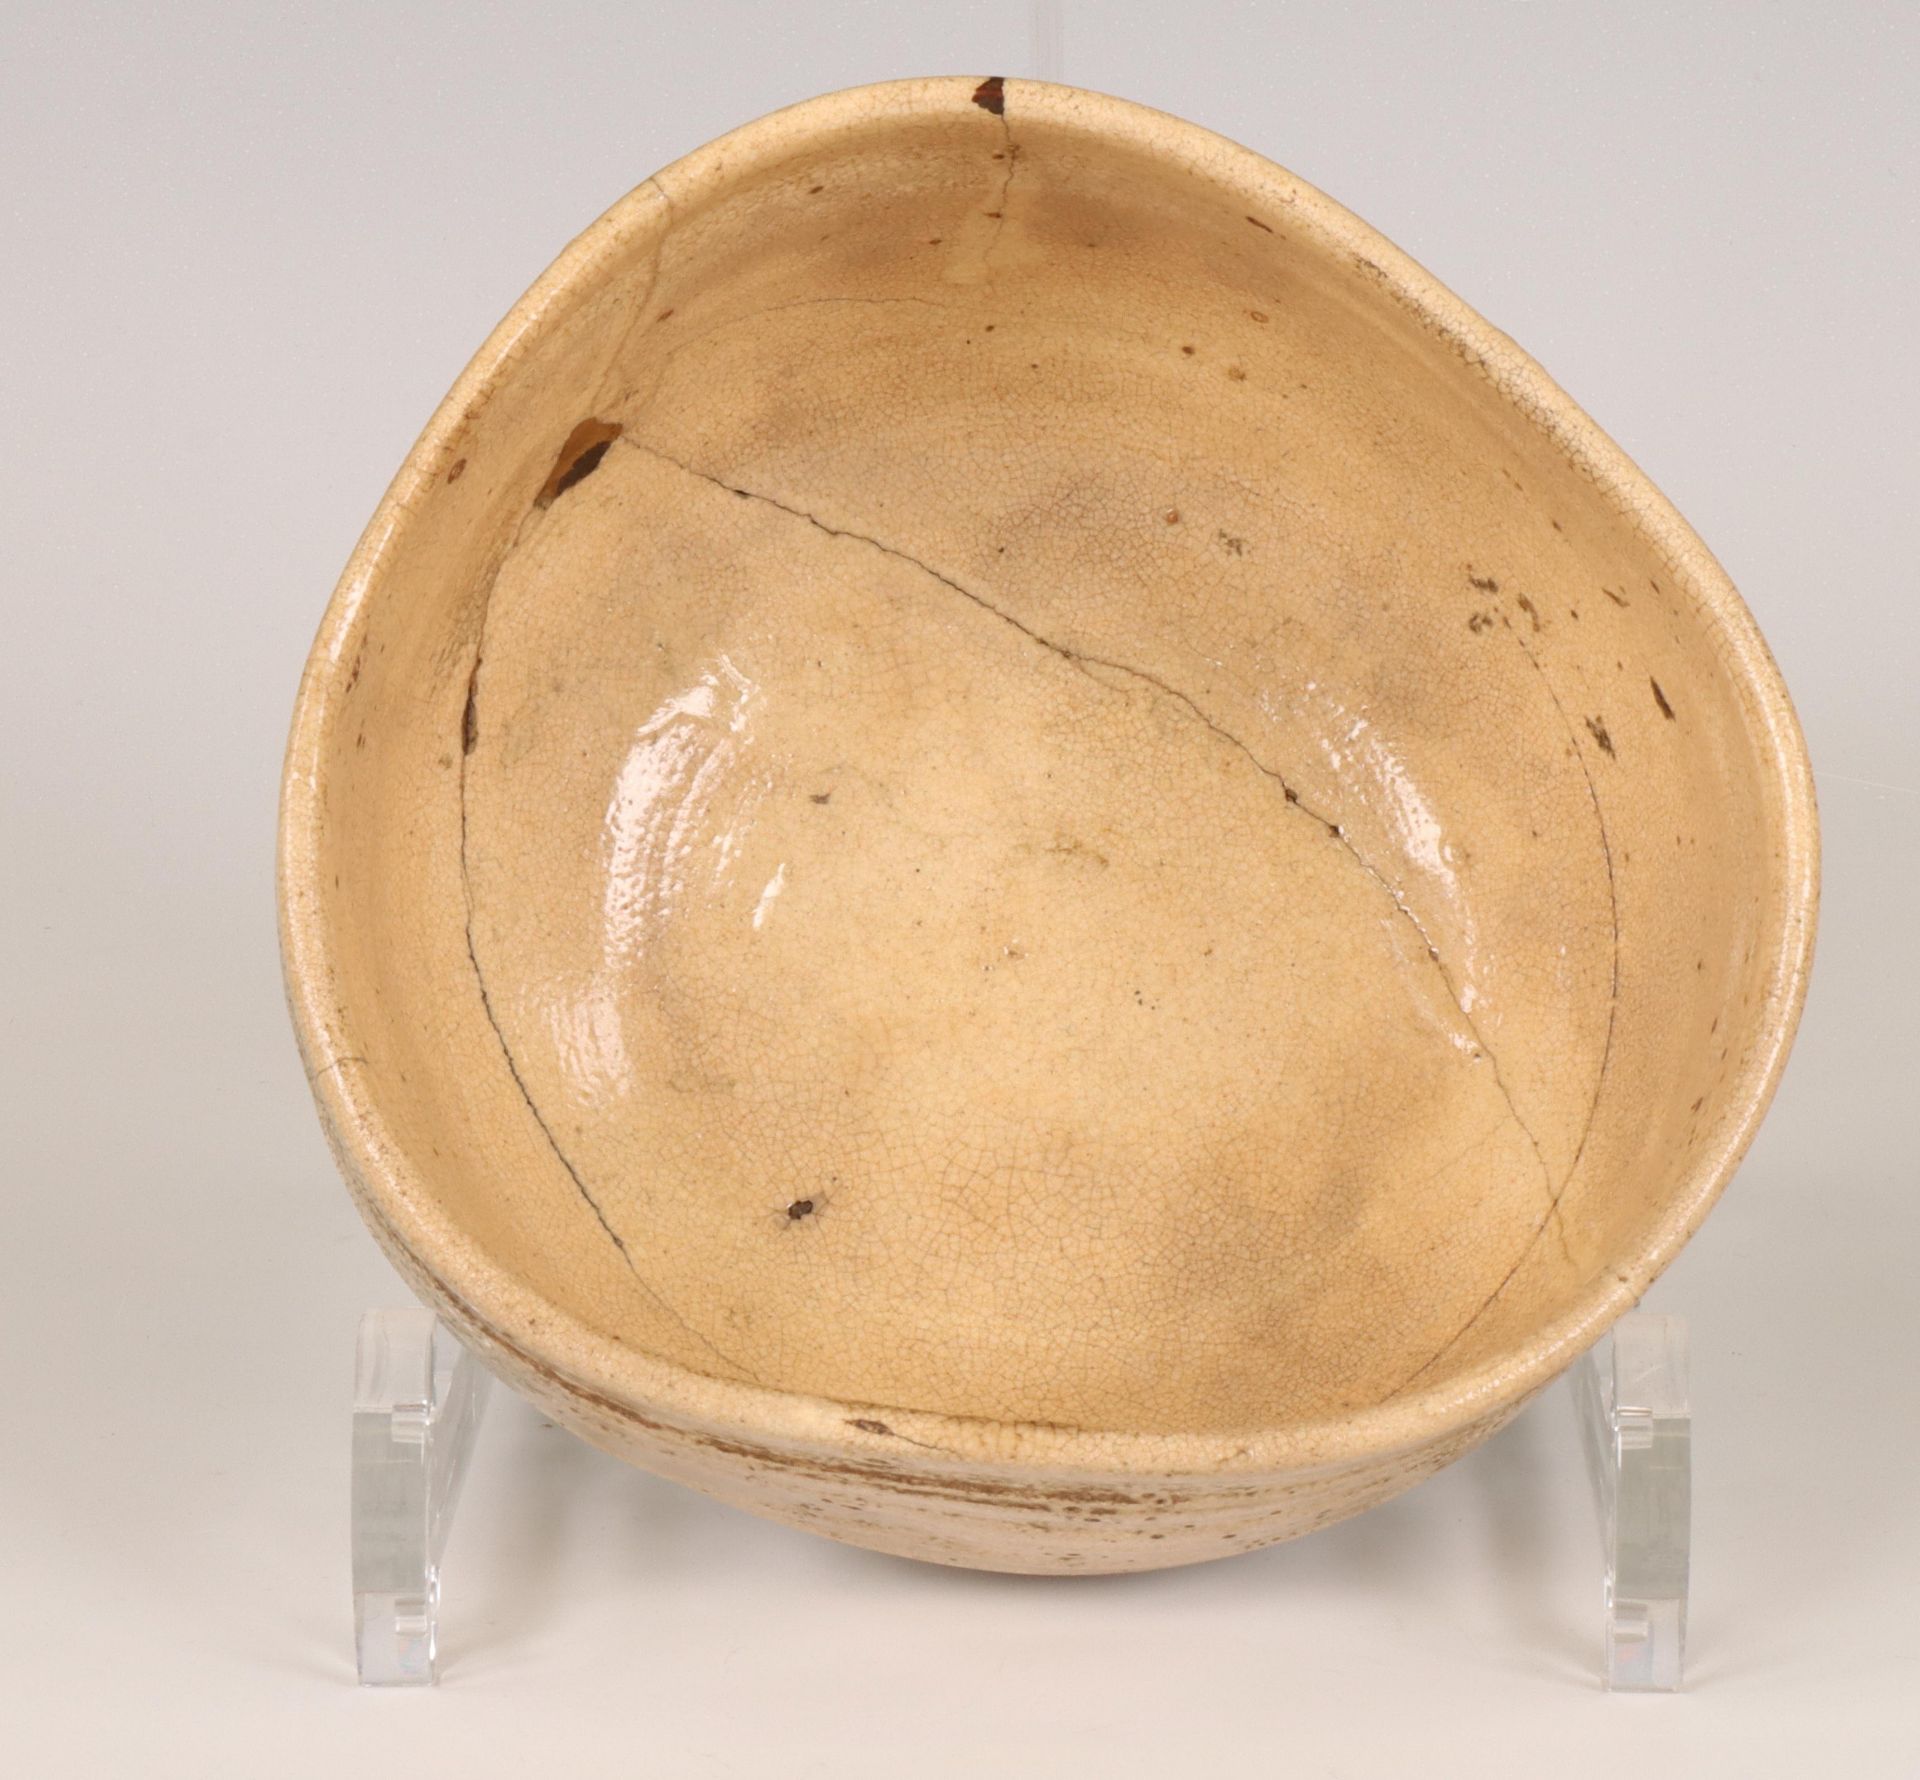 Japan, Hagi ceramic tea bowl, Edo period (1603-1868) - Image 3 of 3